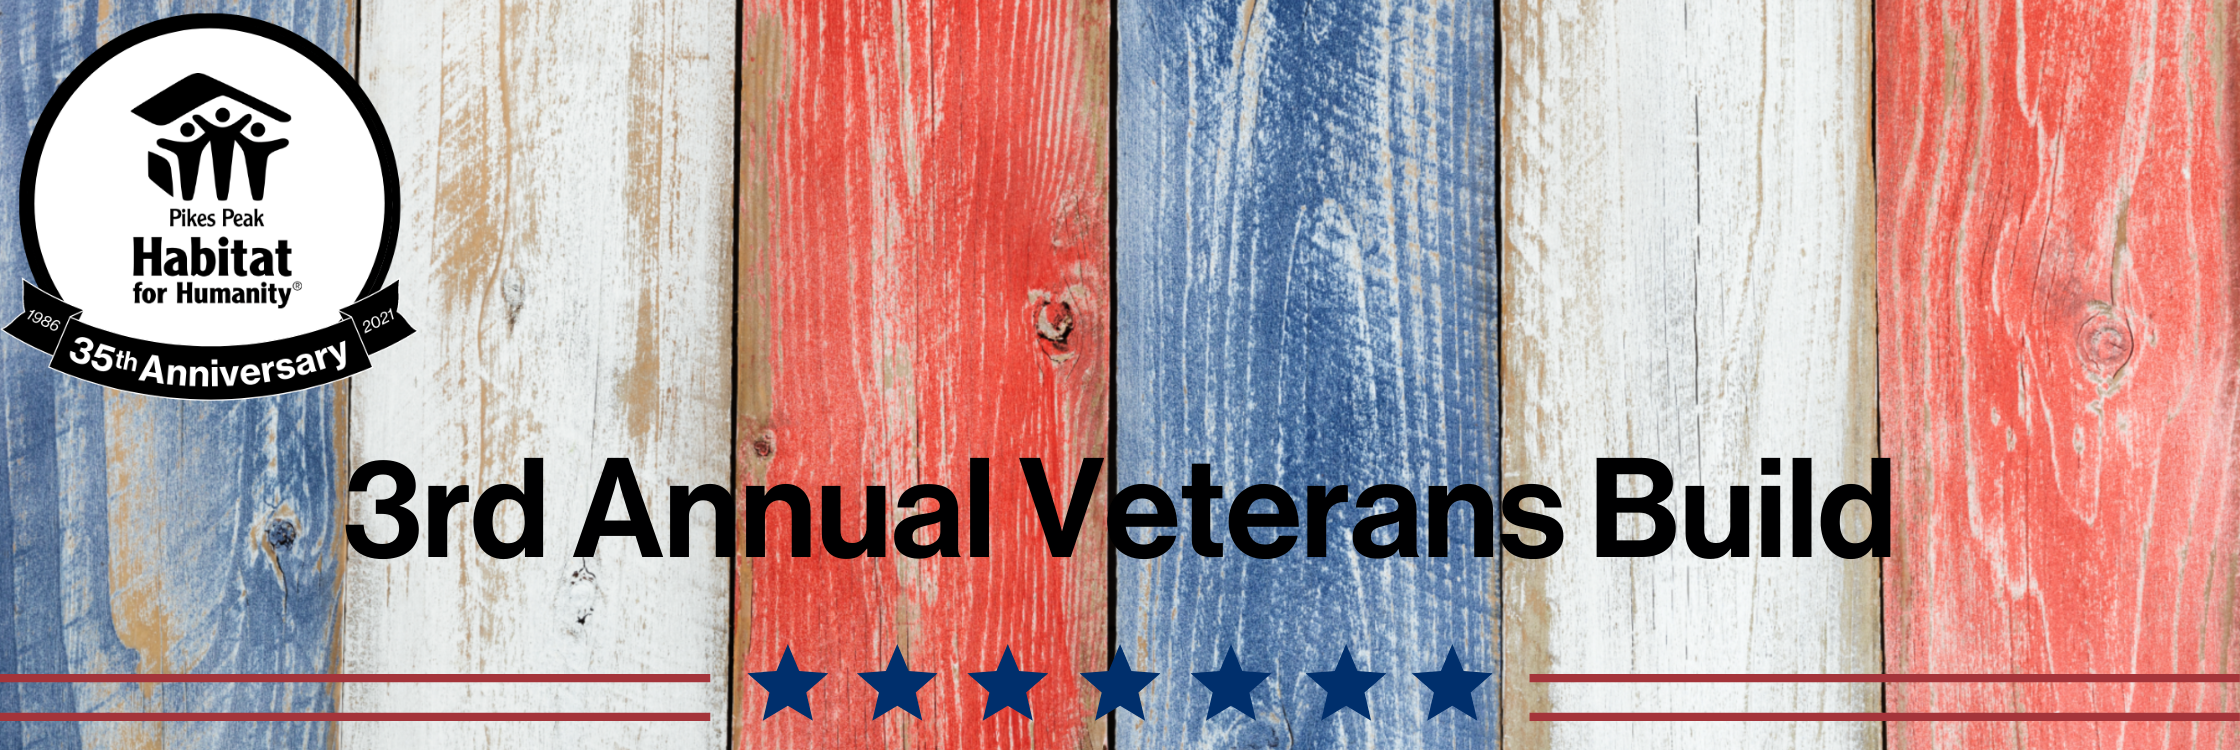 3rd Annual Veterans Build Web Banner